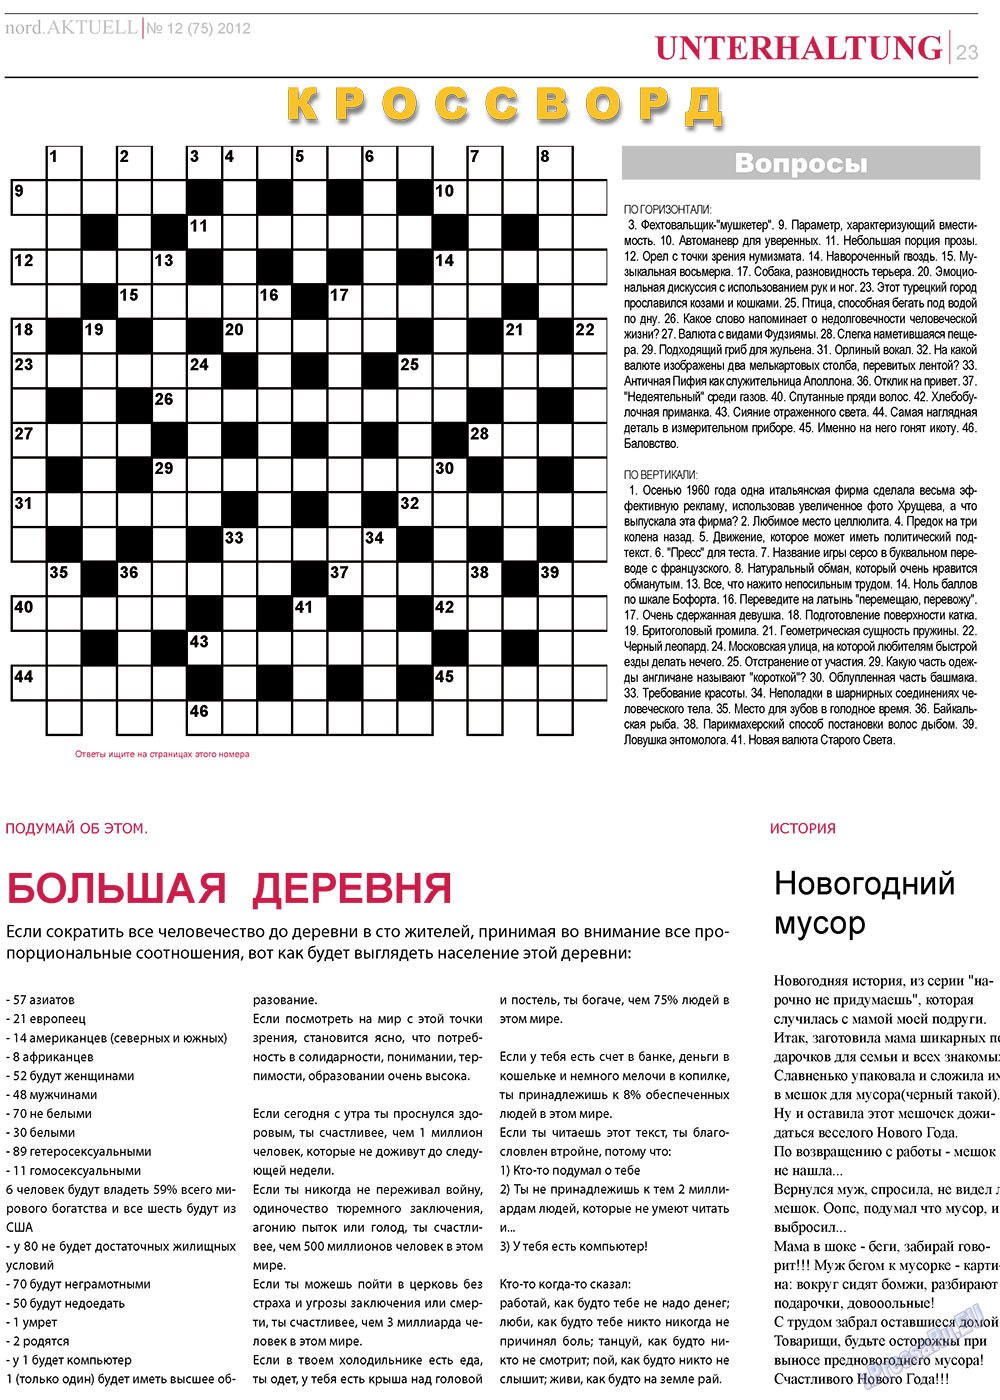 nord.Aktuell, газета. 2012 №12 стр.23